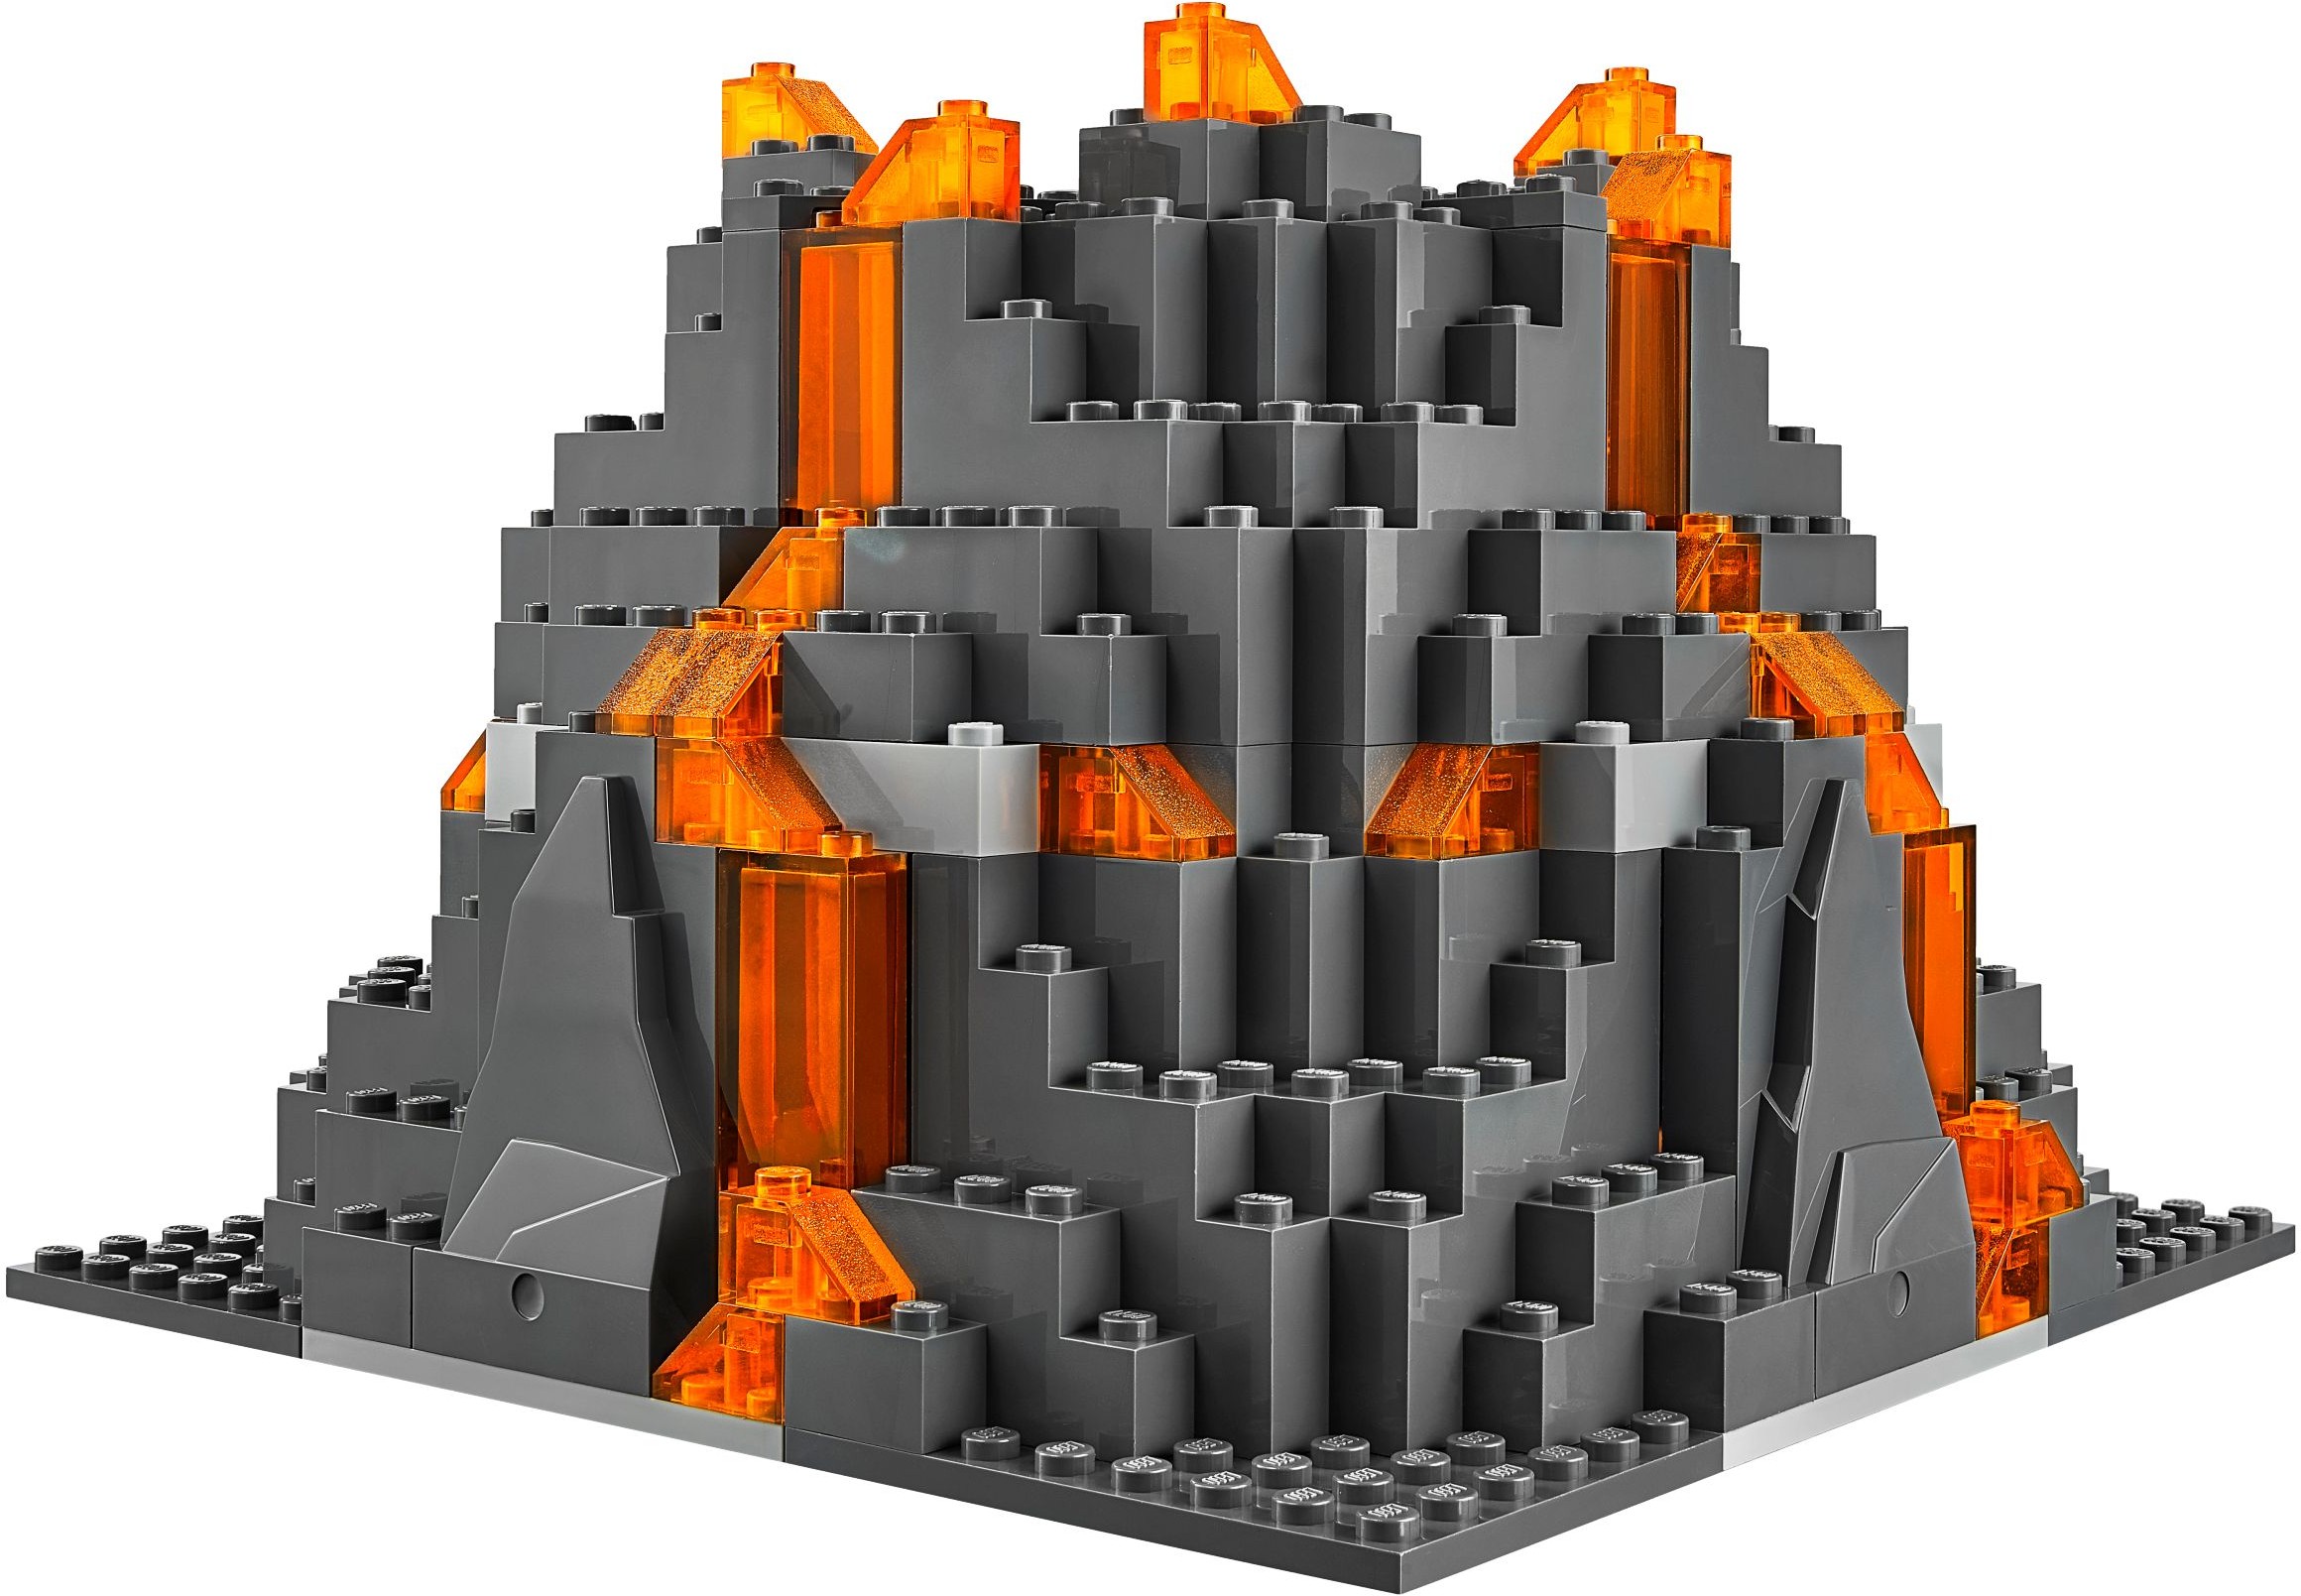 Lego 60124 Volcano Exploration Base - Lego City price